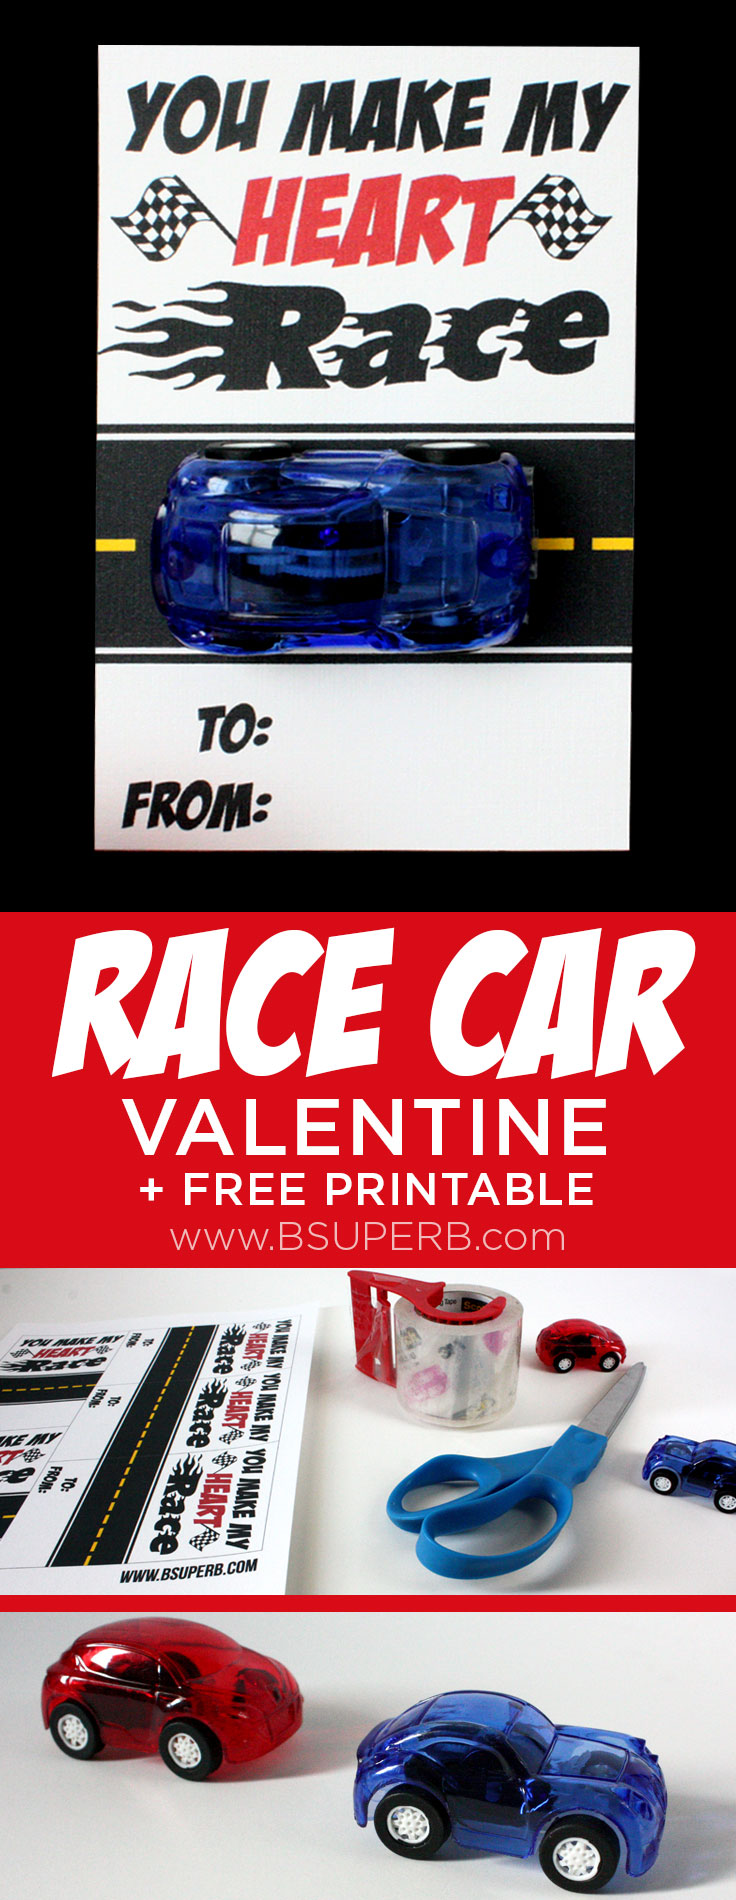 race-car-valentine-free-printable-b-superb